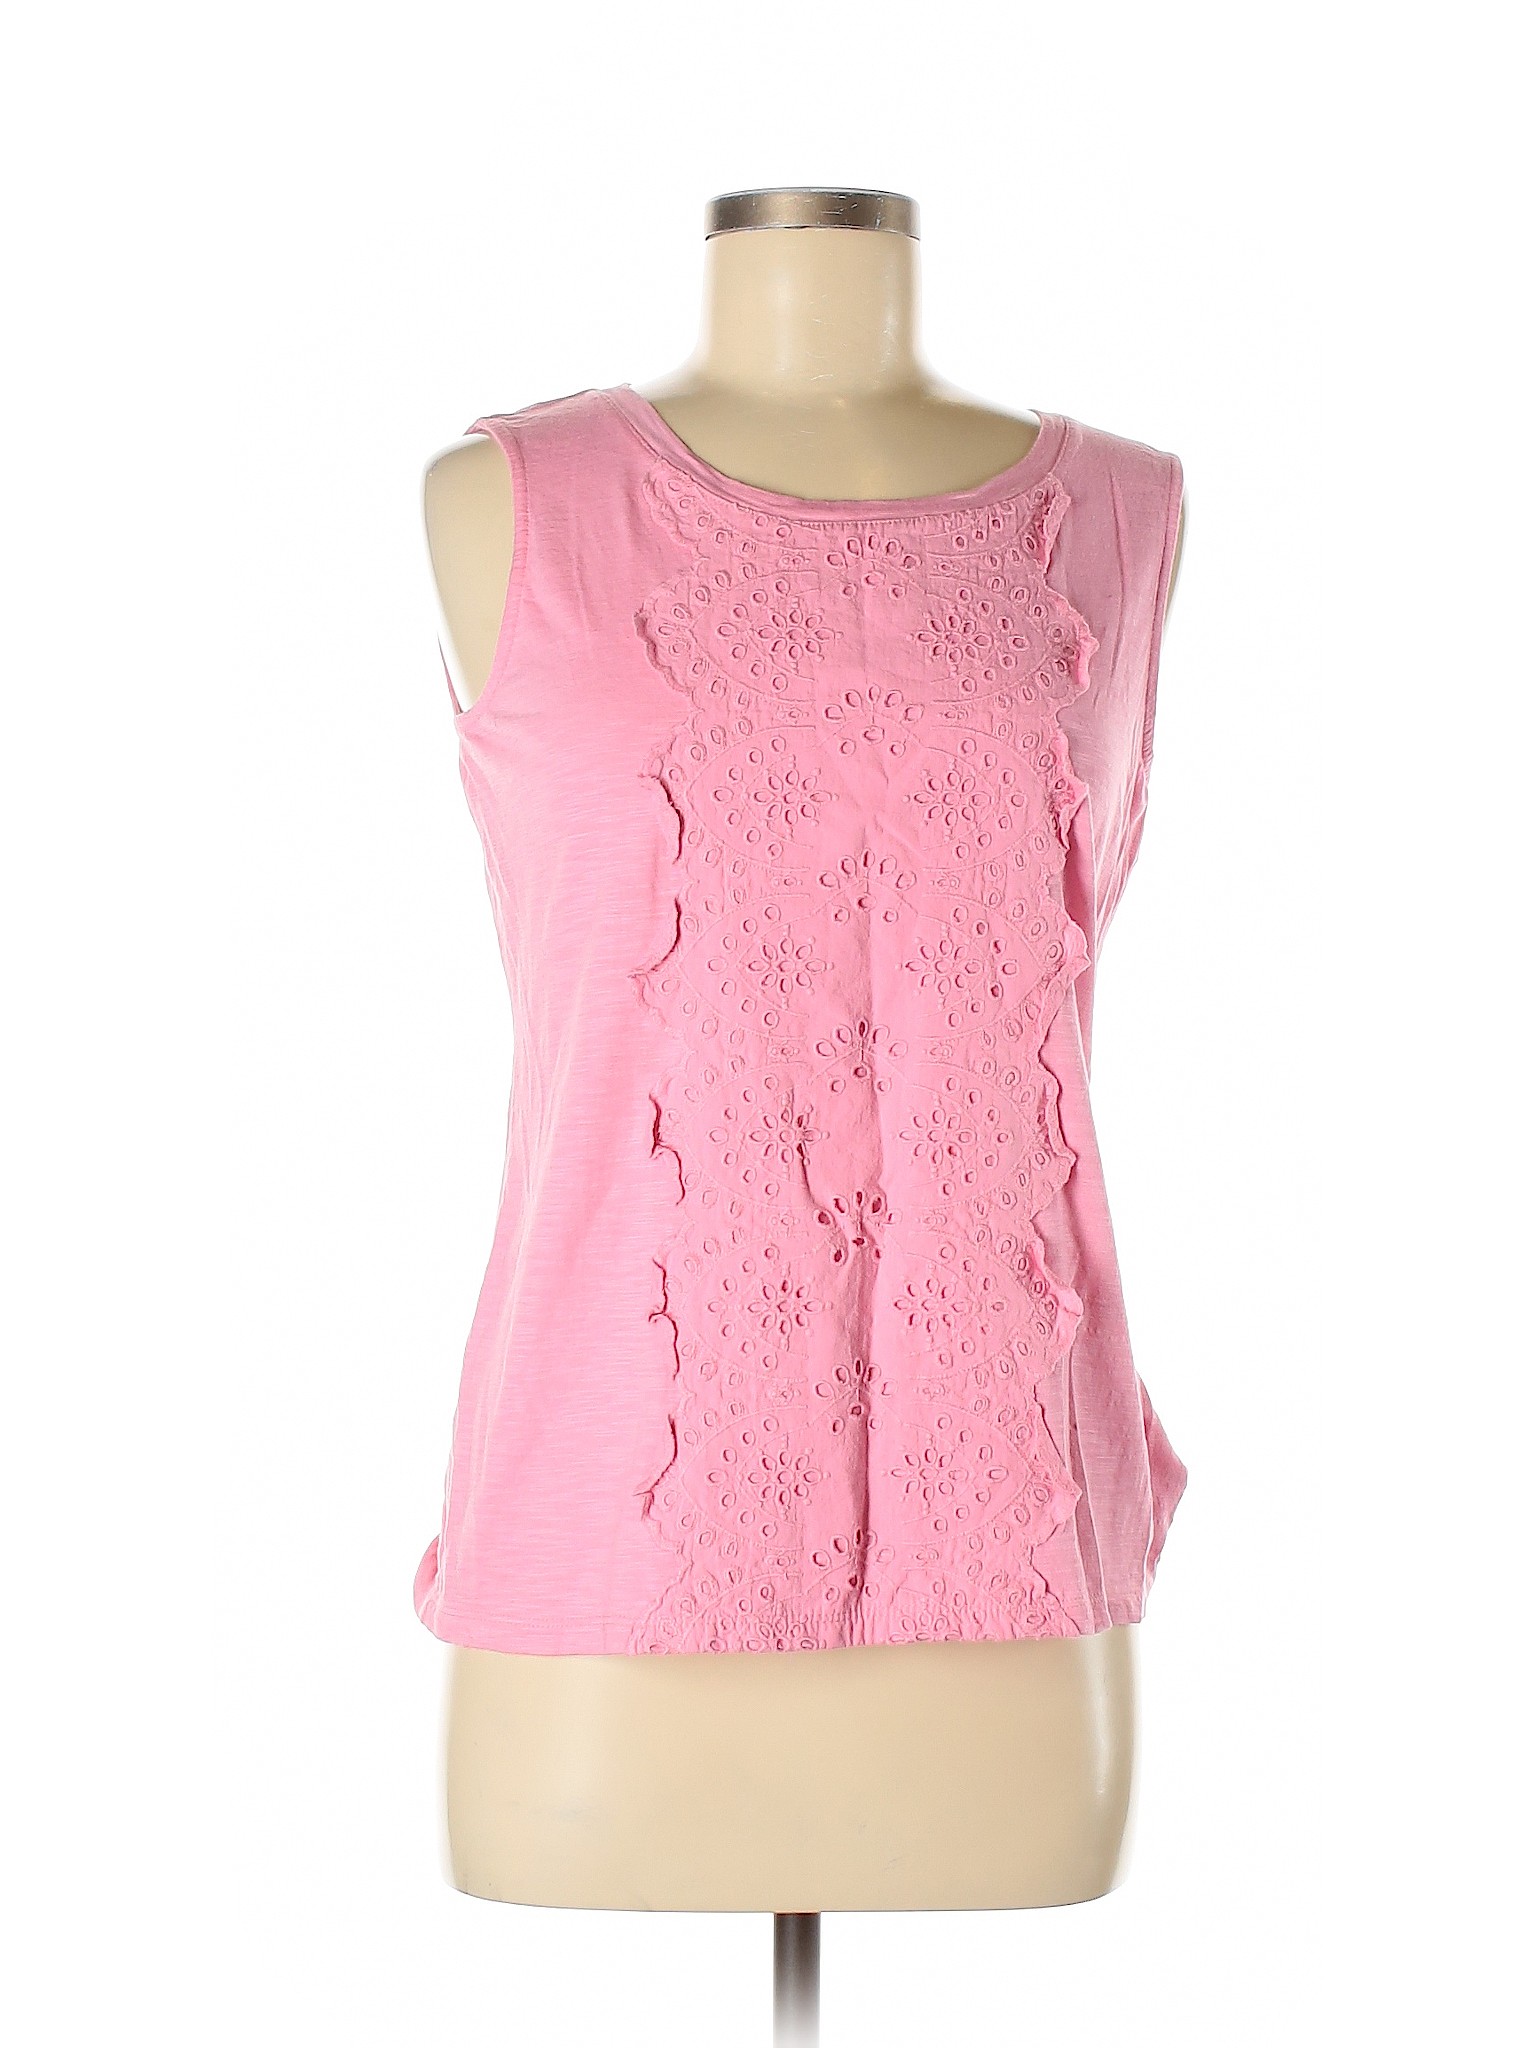 Talbots Women Pink Sleeveless Top M | eBay